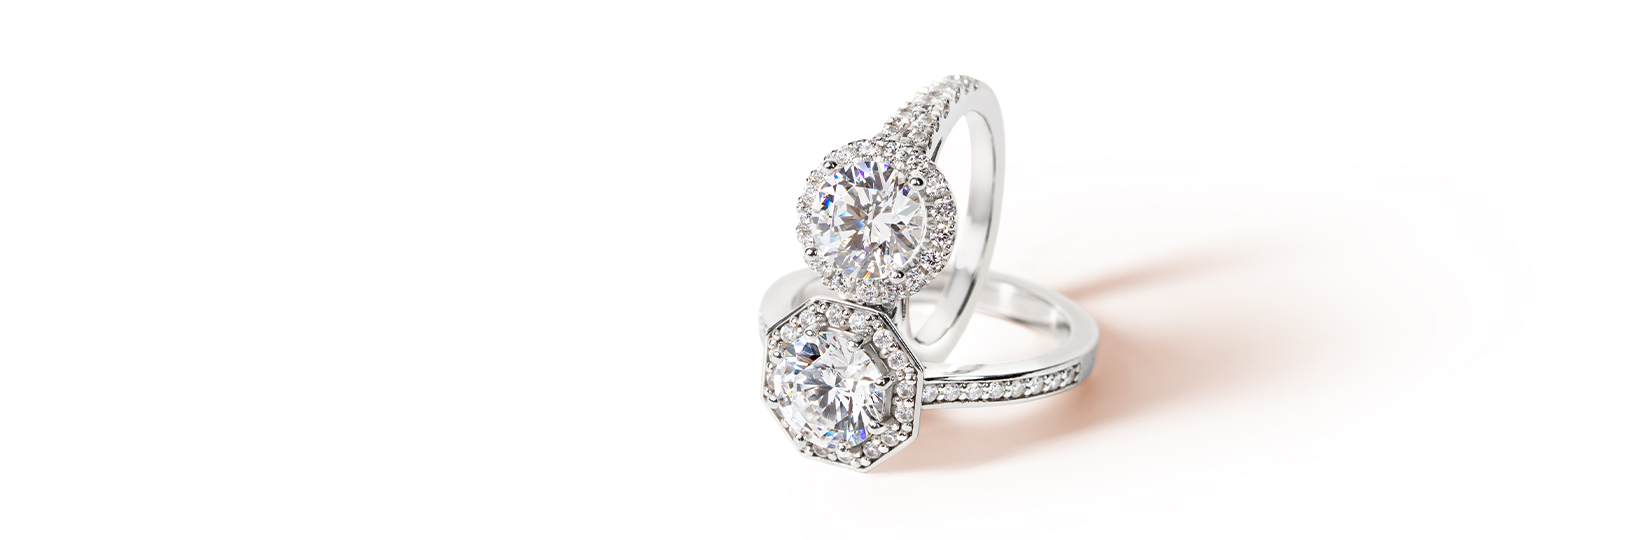 Fantastic Emerald Cut Diamond Engagement Ring 14K White Gold 1.10Ct IF/J GIA